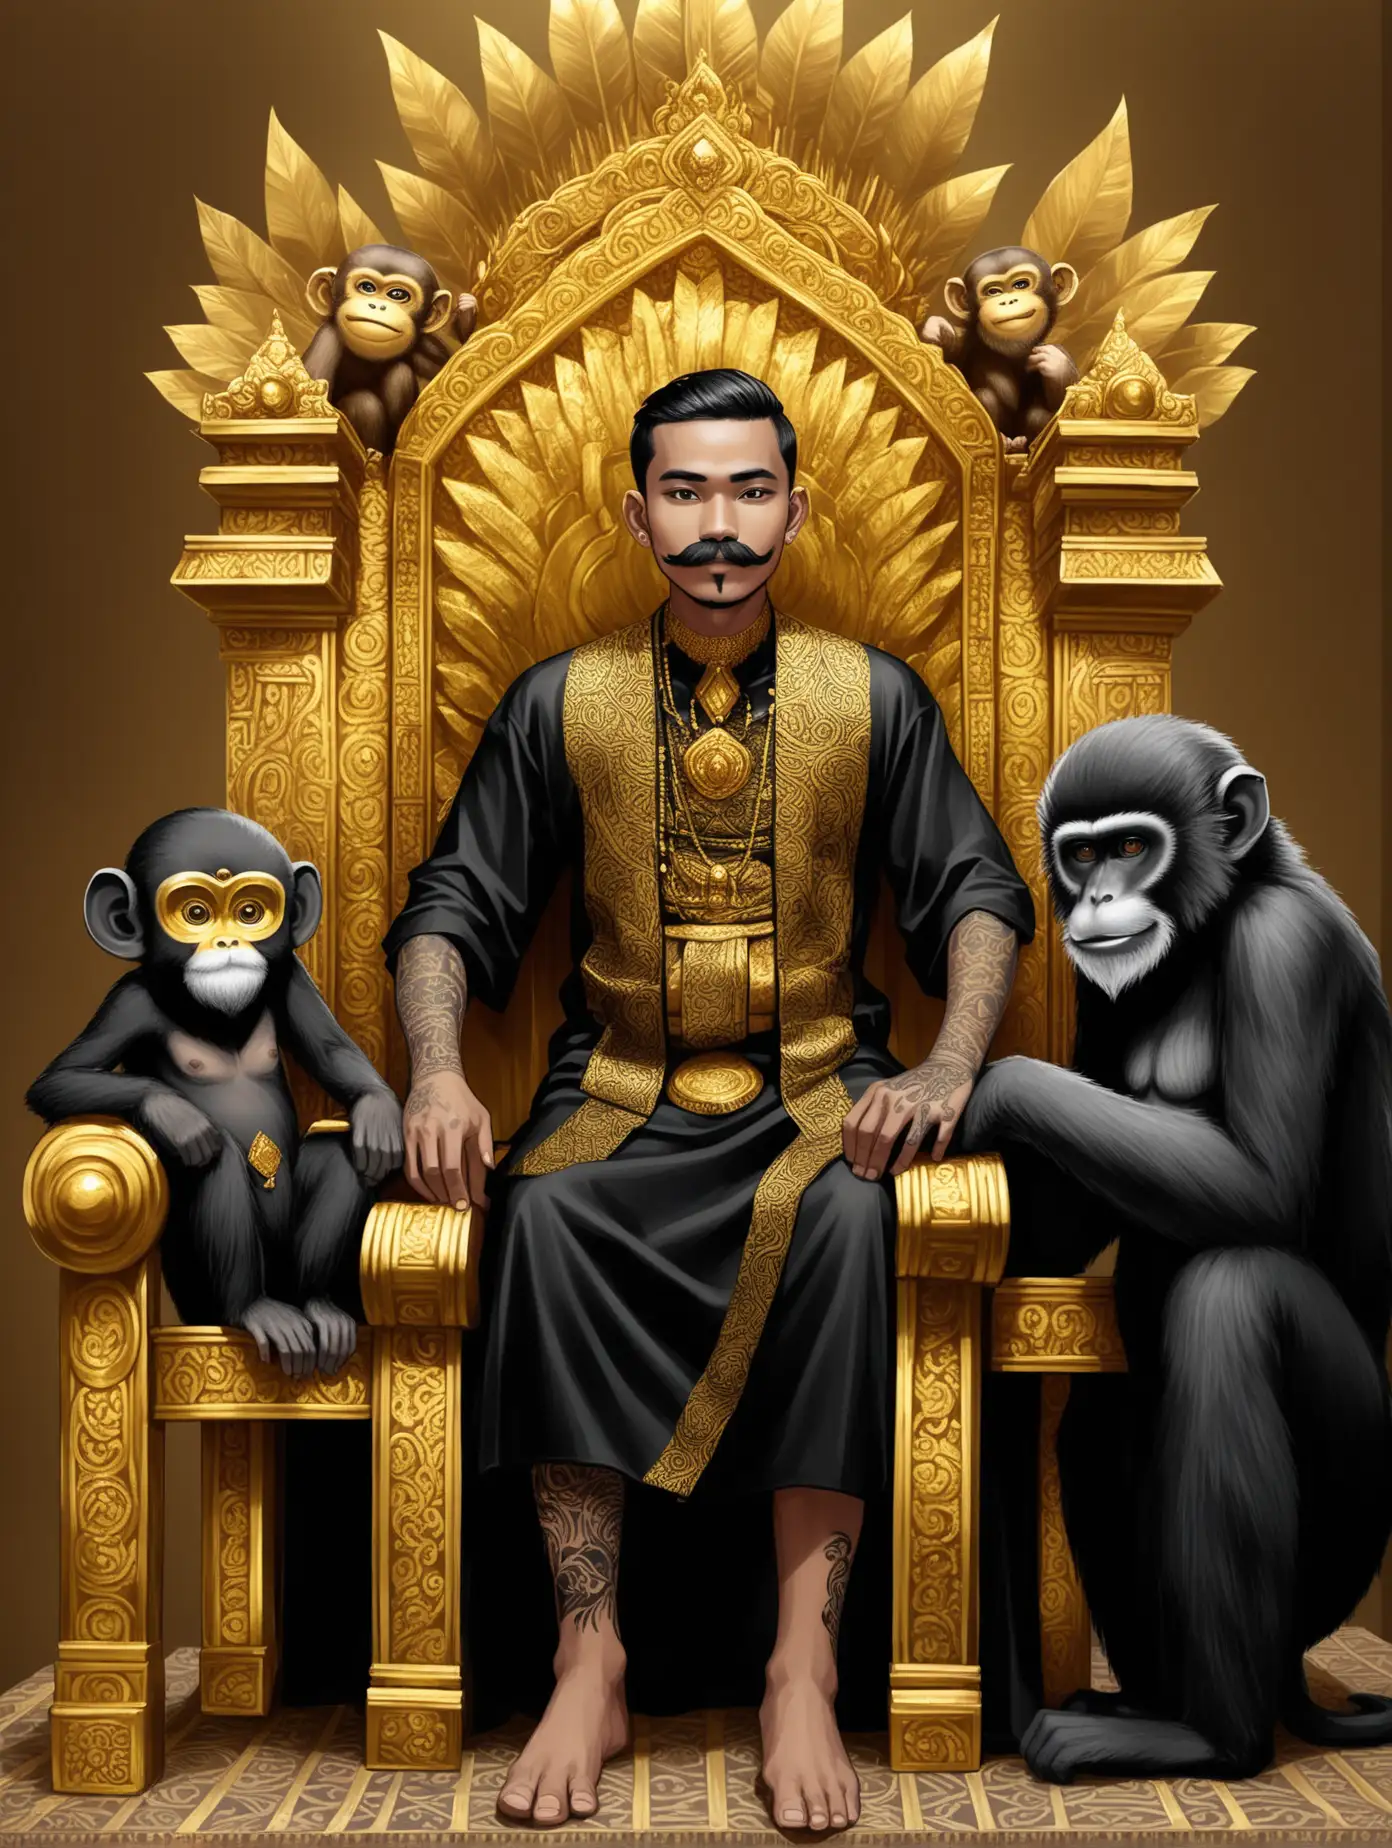 25YearOld-Indonesian-Man-on-Golden-Throne-with-Black-Monkey-Companion